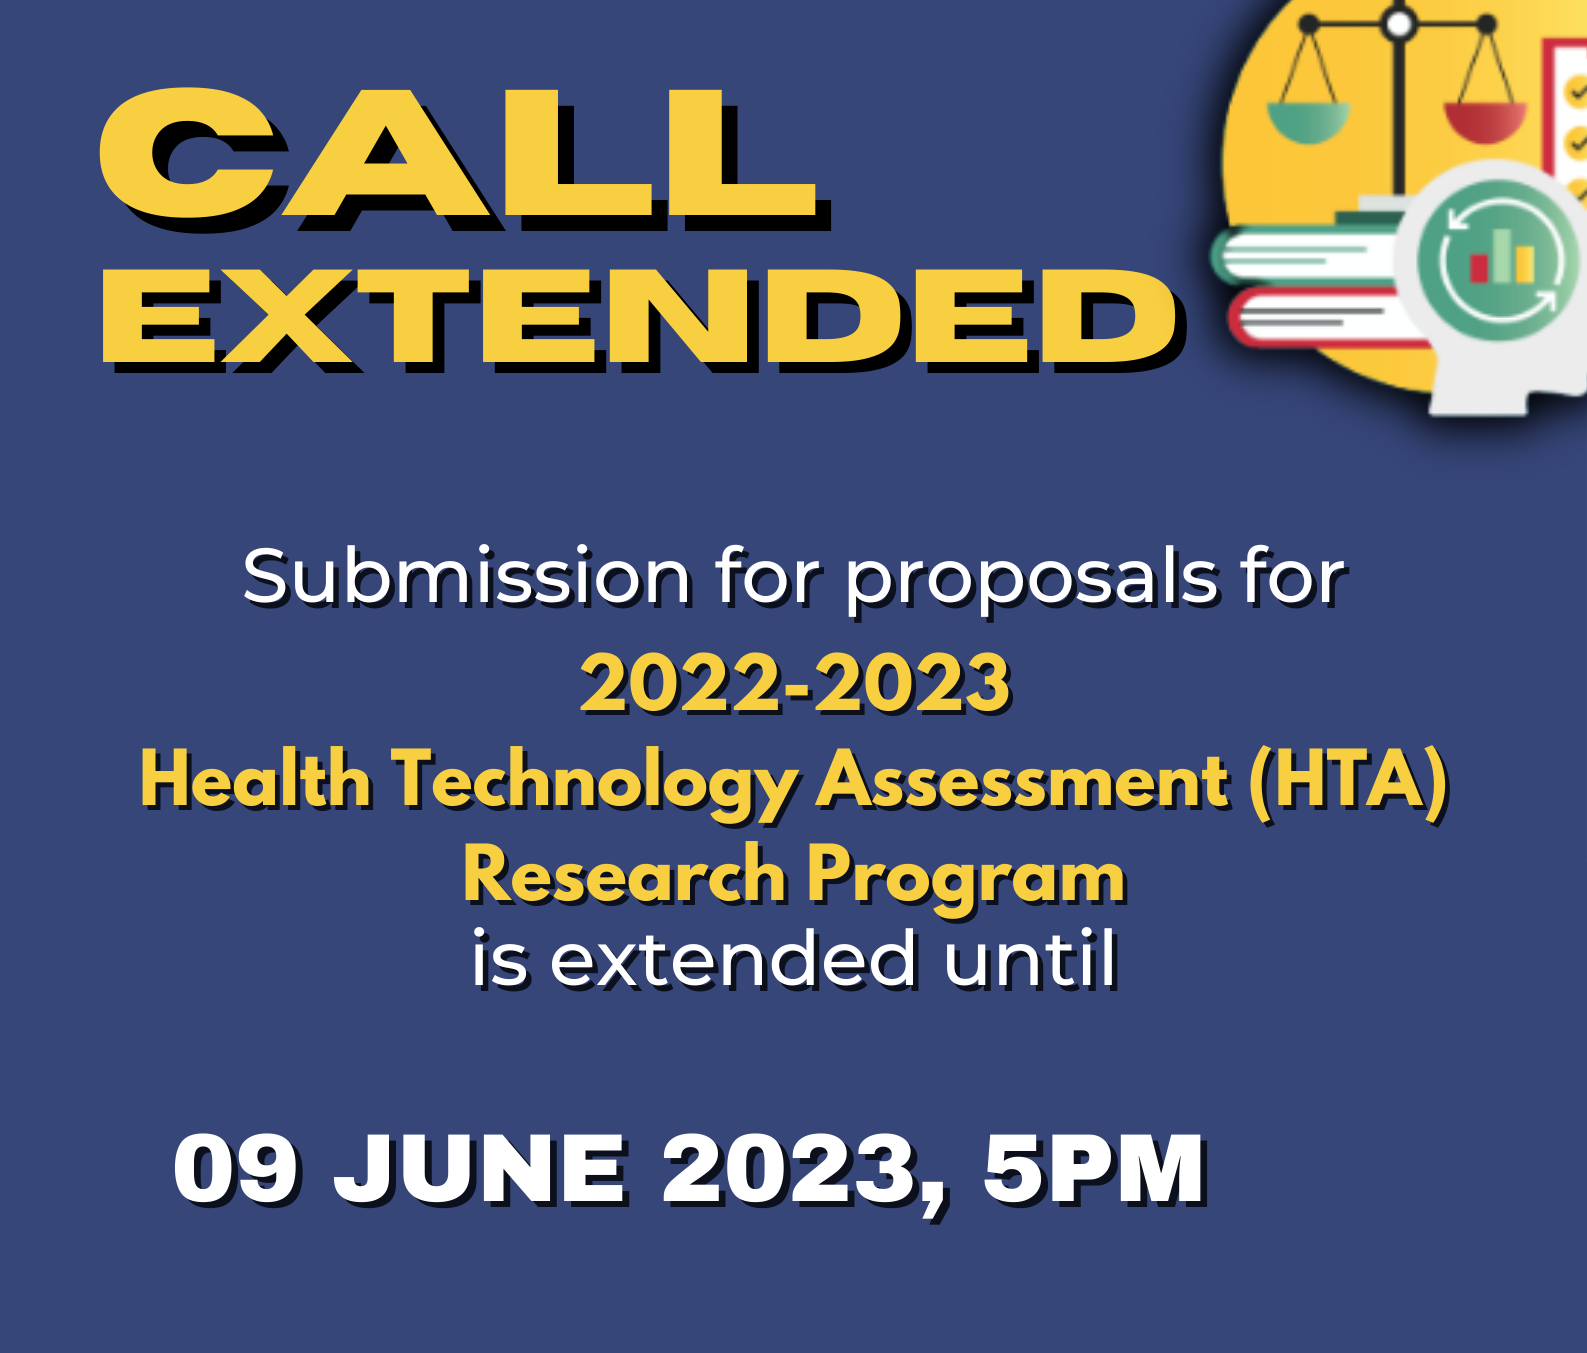 CALL EXTENDED: PCHRD Call for Proposal on 2022 -2023 Health Technology Assessment (HTA) Research Agenda Program